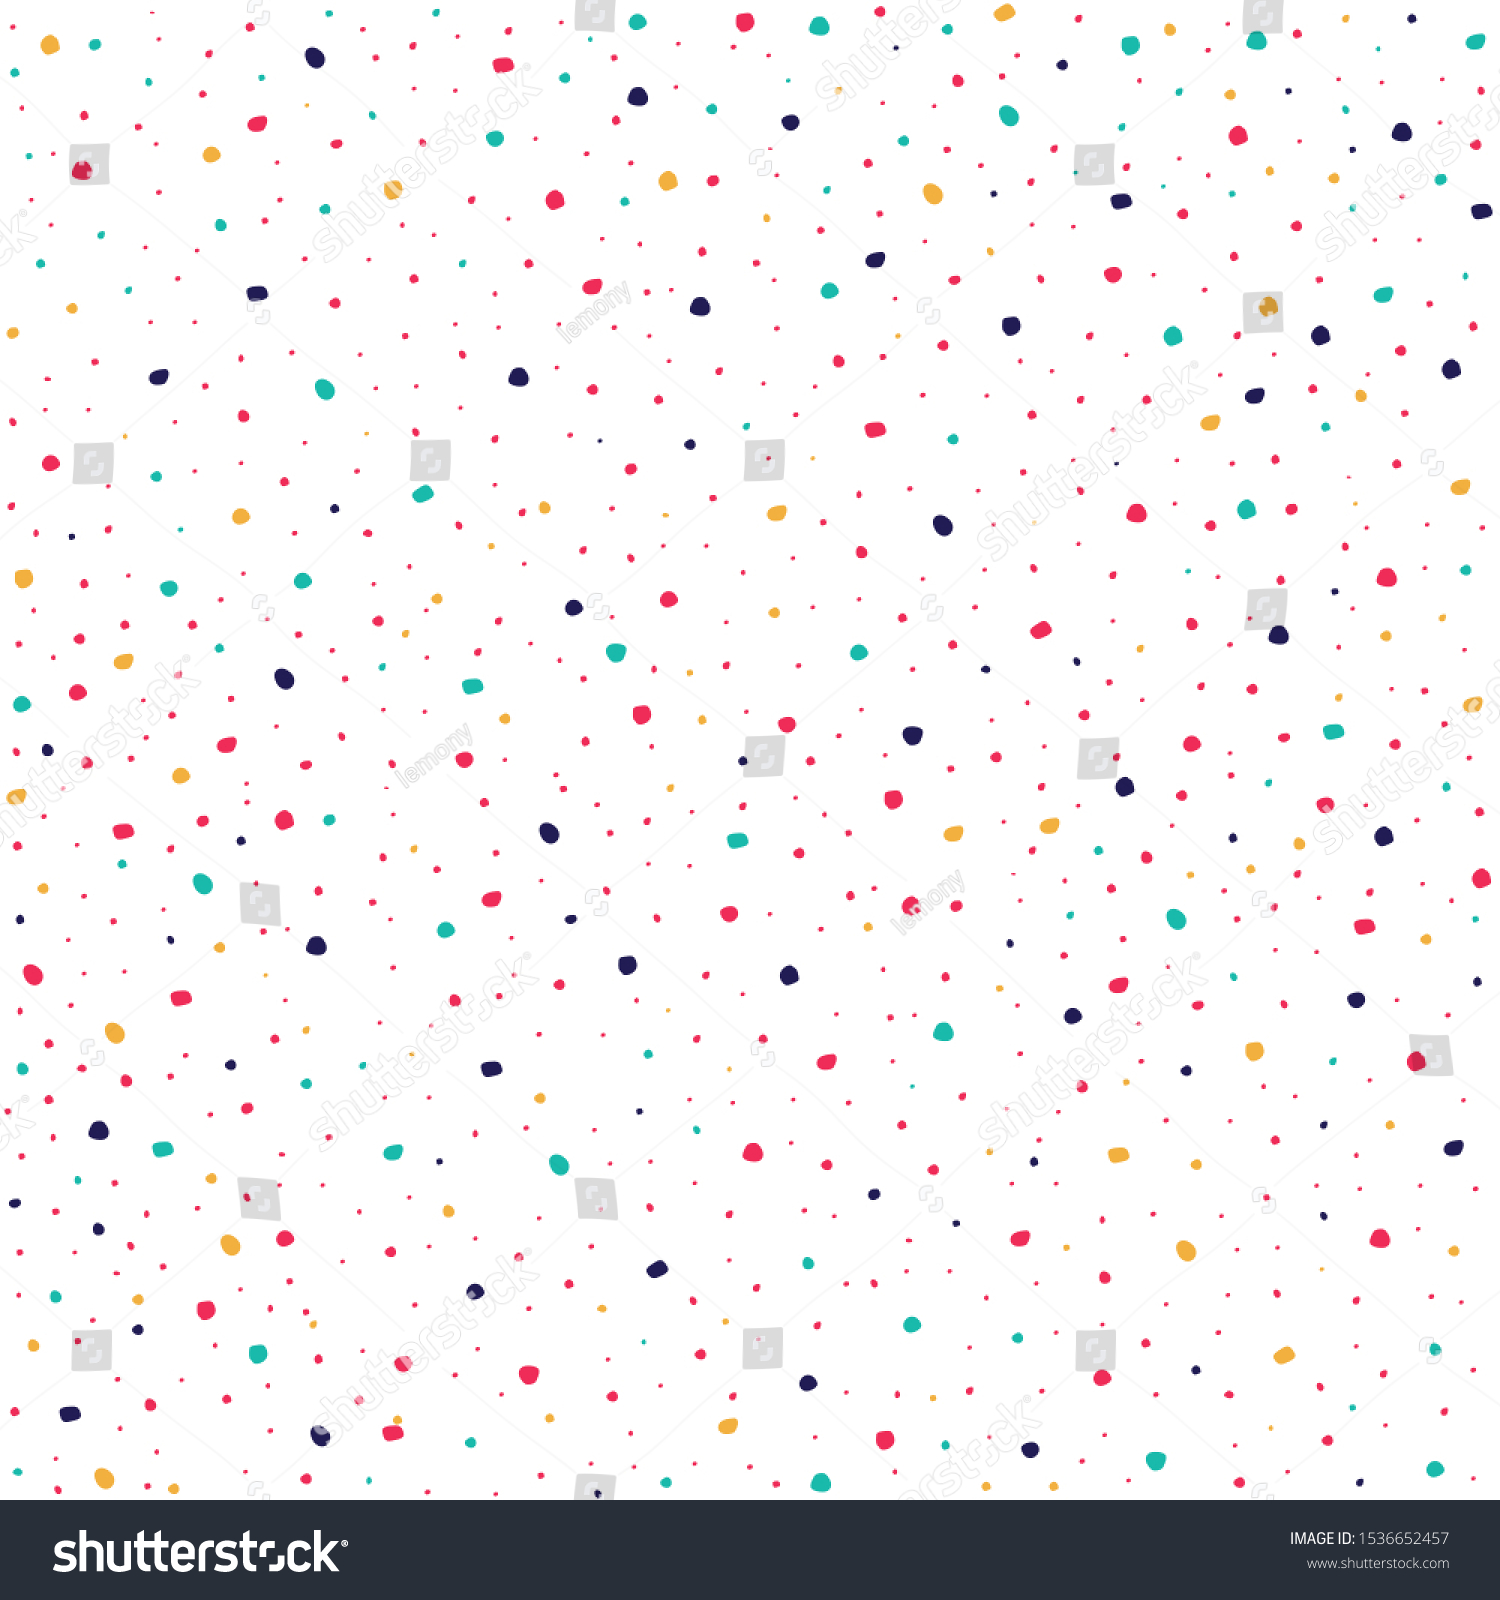 Colored dots wallpaper Images, Stock Photos & Vectors | Shutterstock